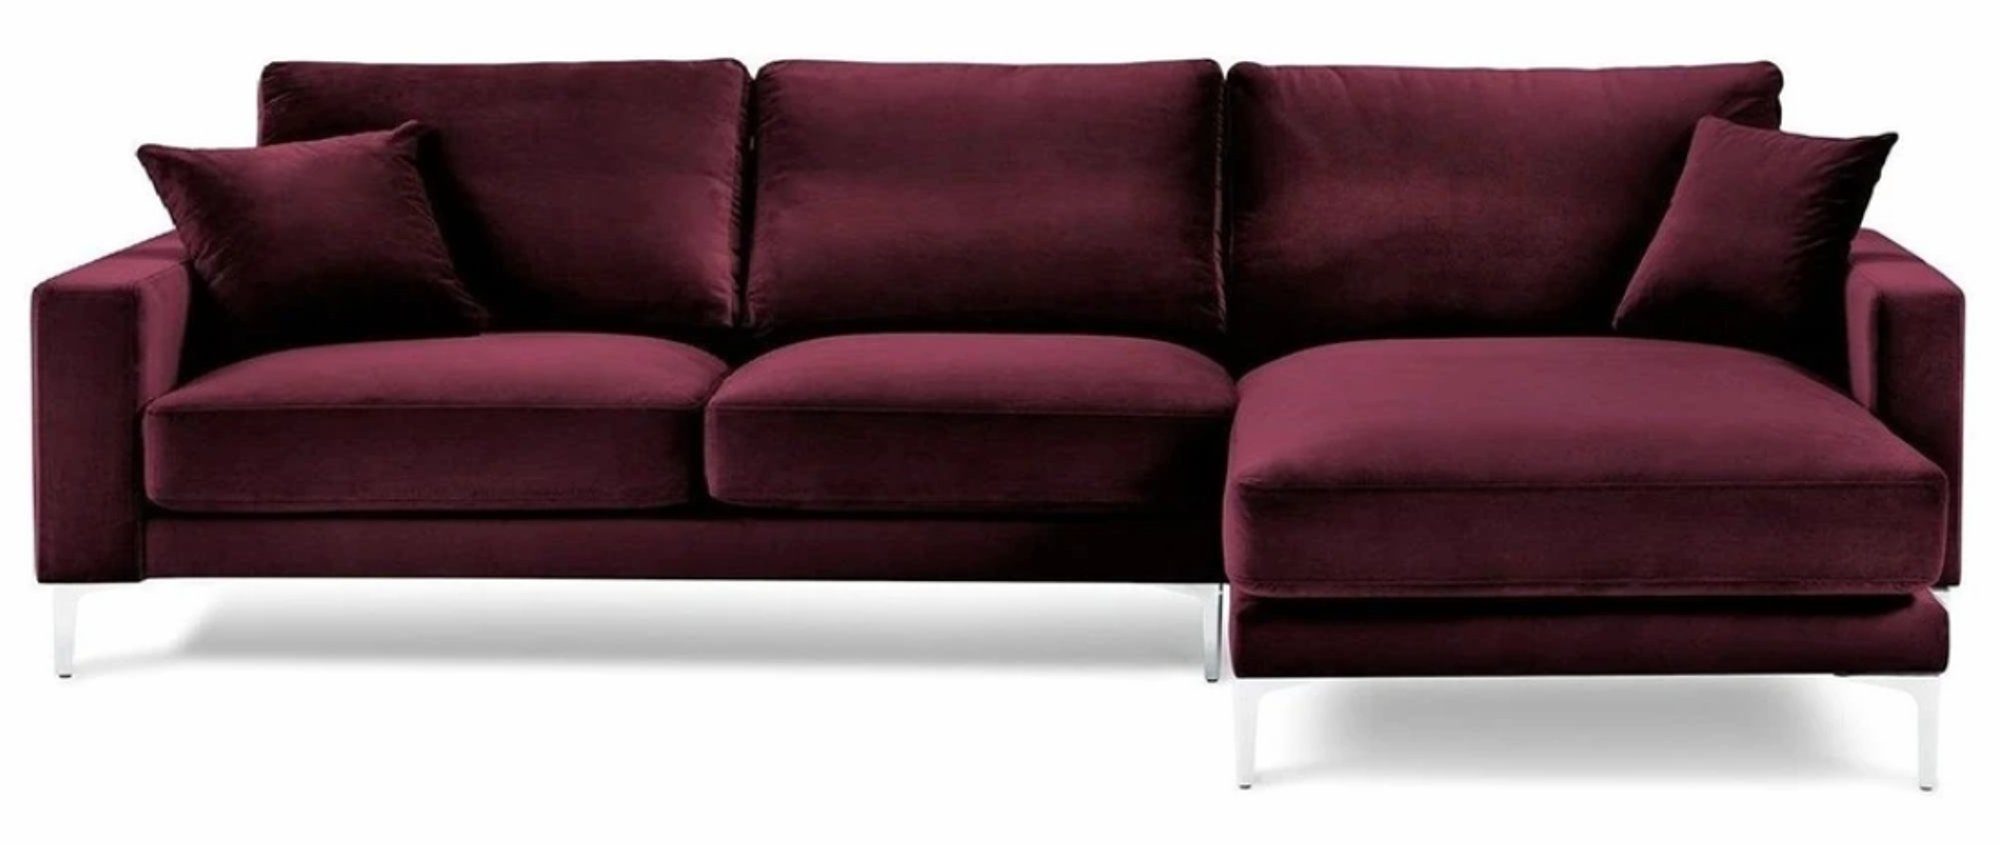 JVmoebel Ecksofa Burgund Rot Design Couchen Polster Sofa Sofas bordaux Ecksofa, Made in Europe